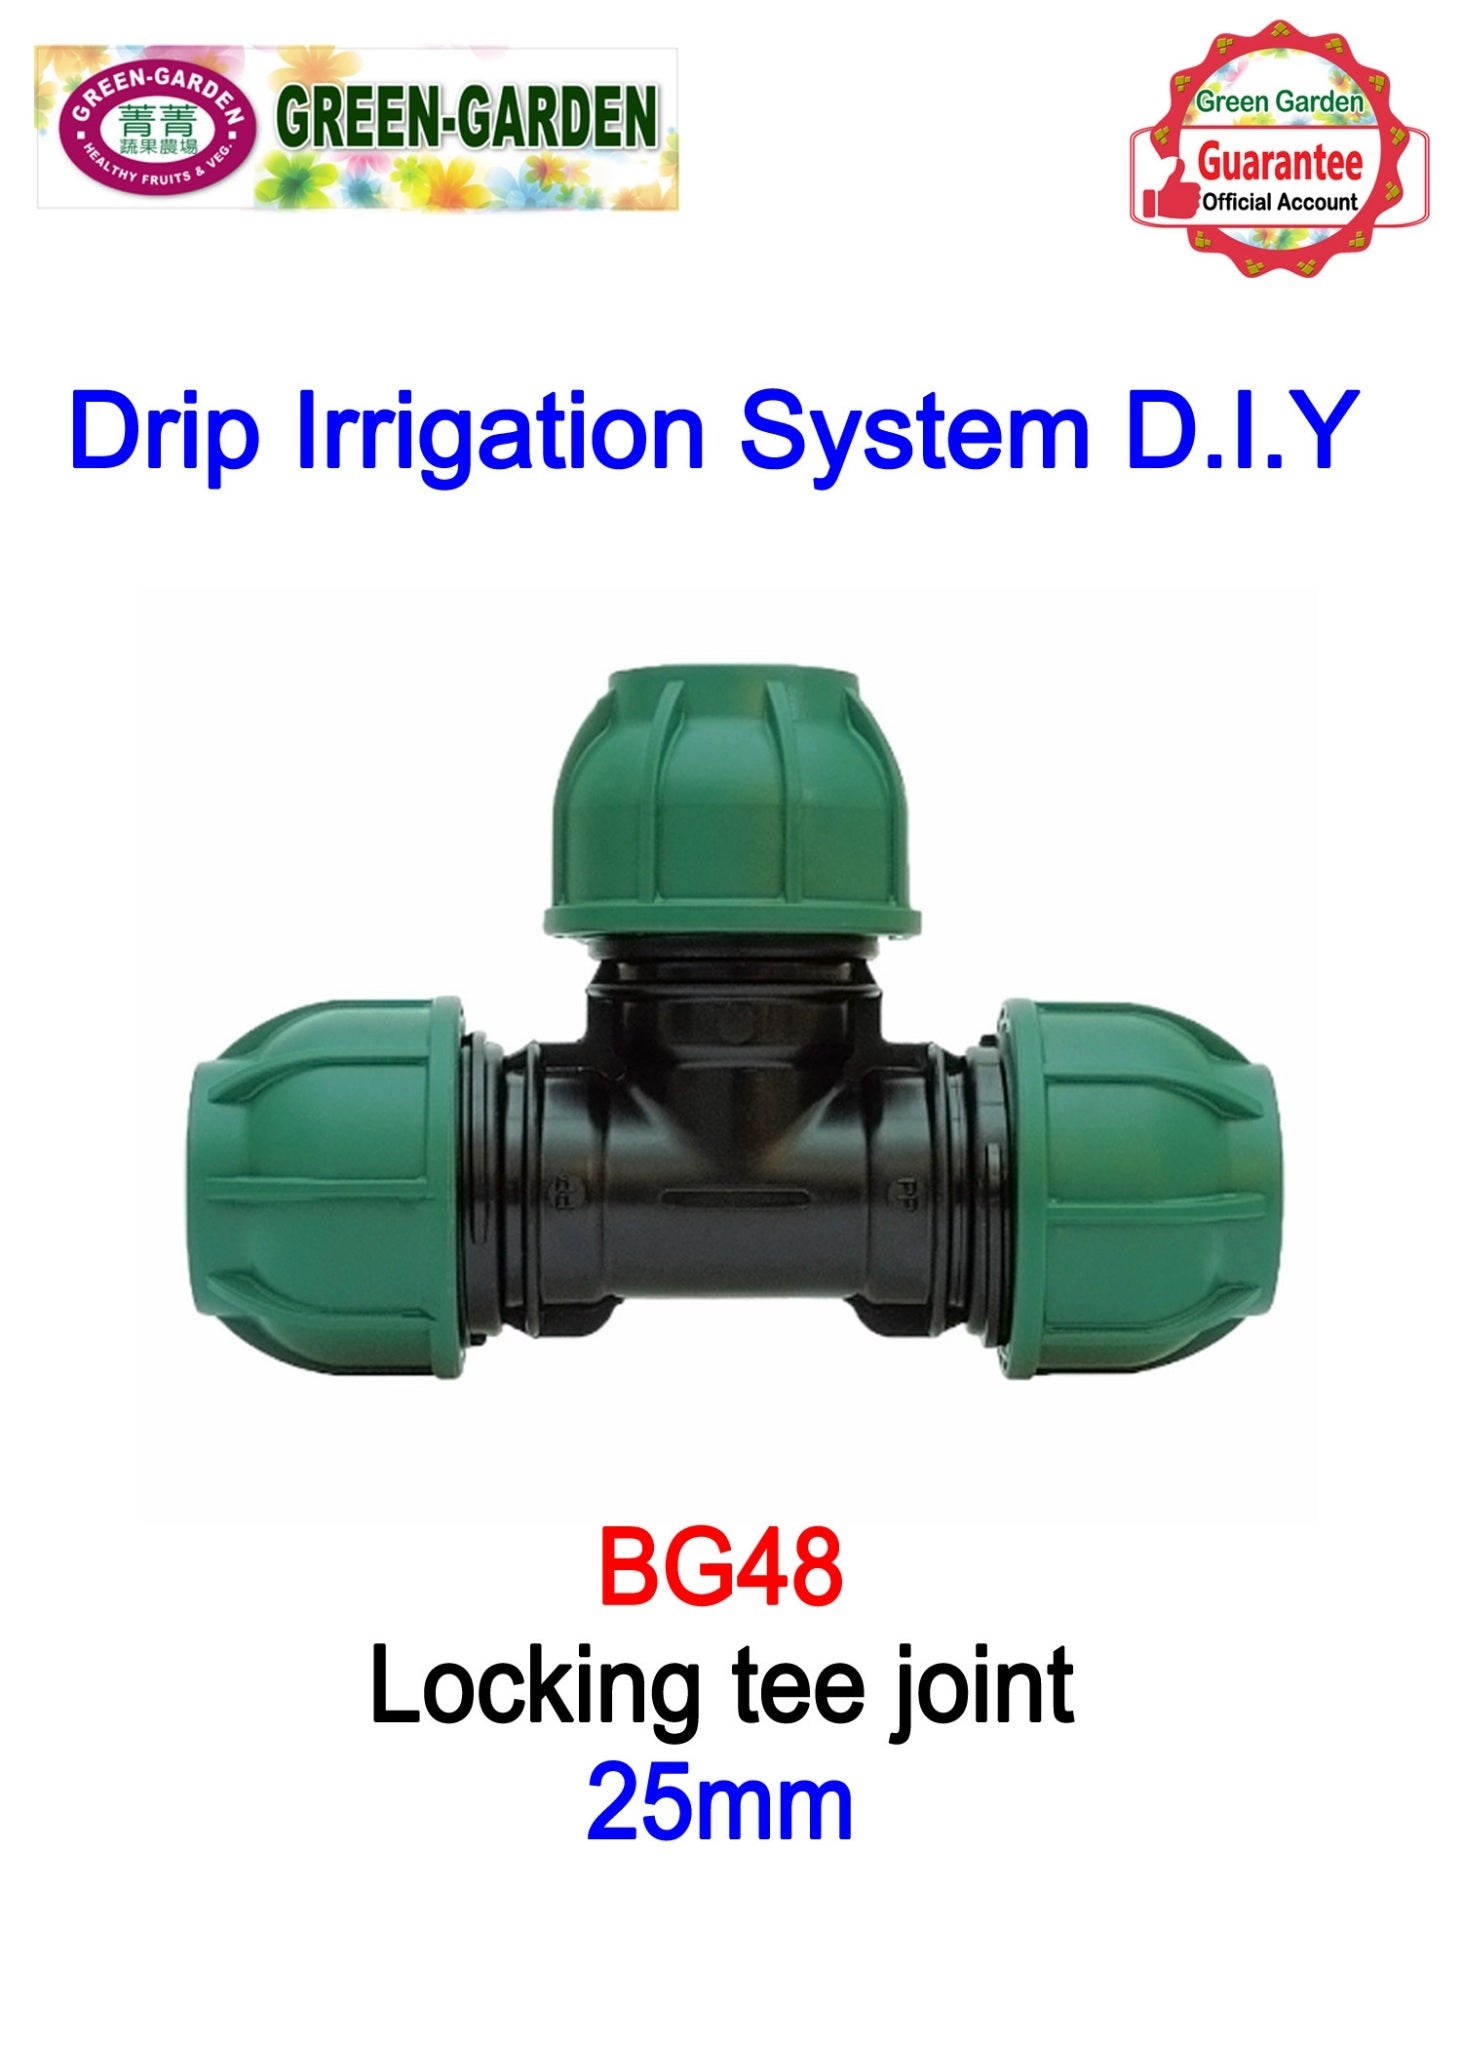 Drip Irrigation System - 25mm lock tee joint BG48